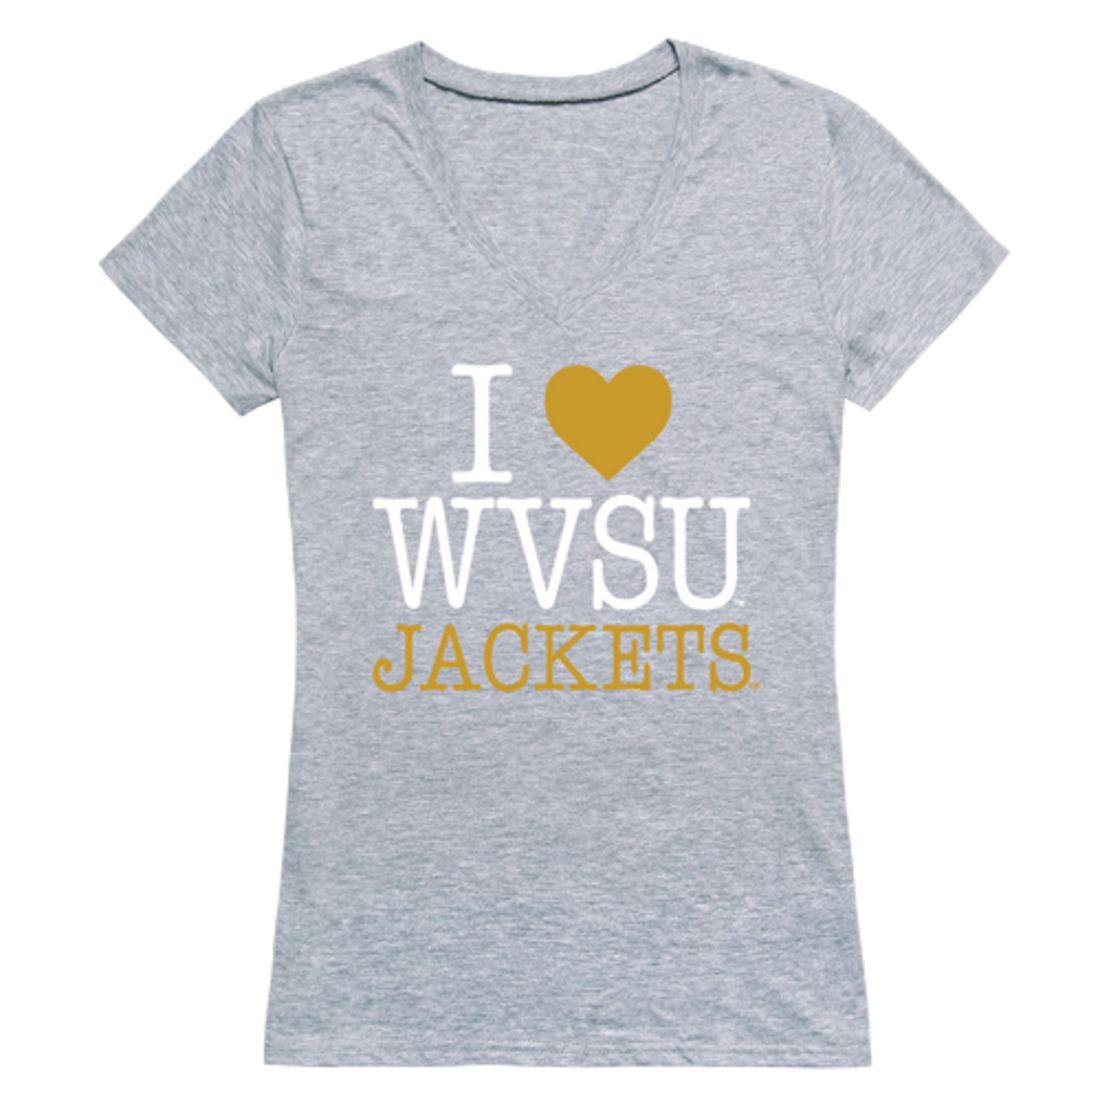 I Love WVSU West Virginia State University Yellow Jackets Womens T-Shirt-Campus-Wardrobe